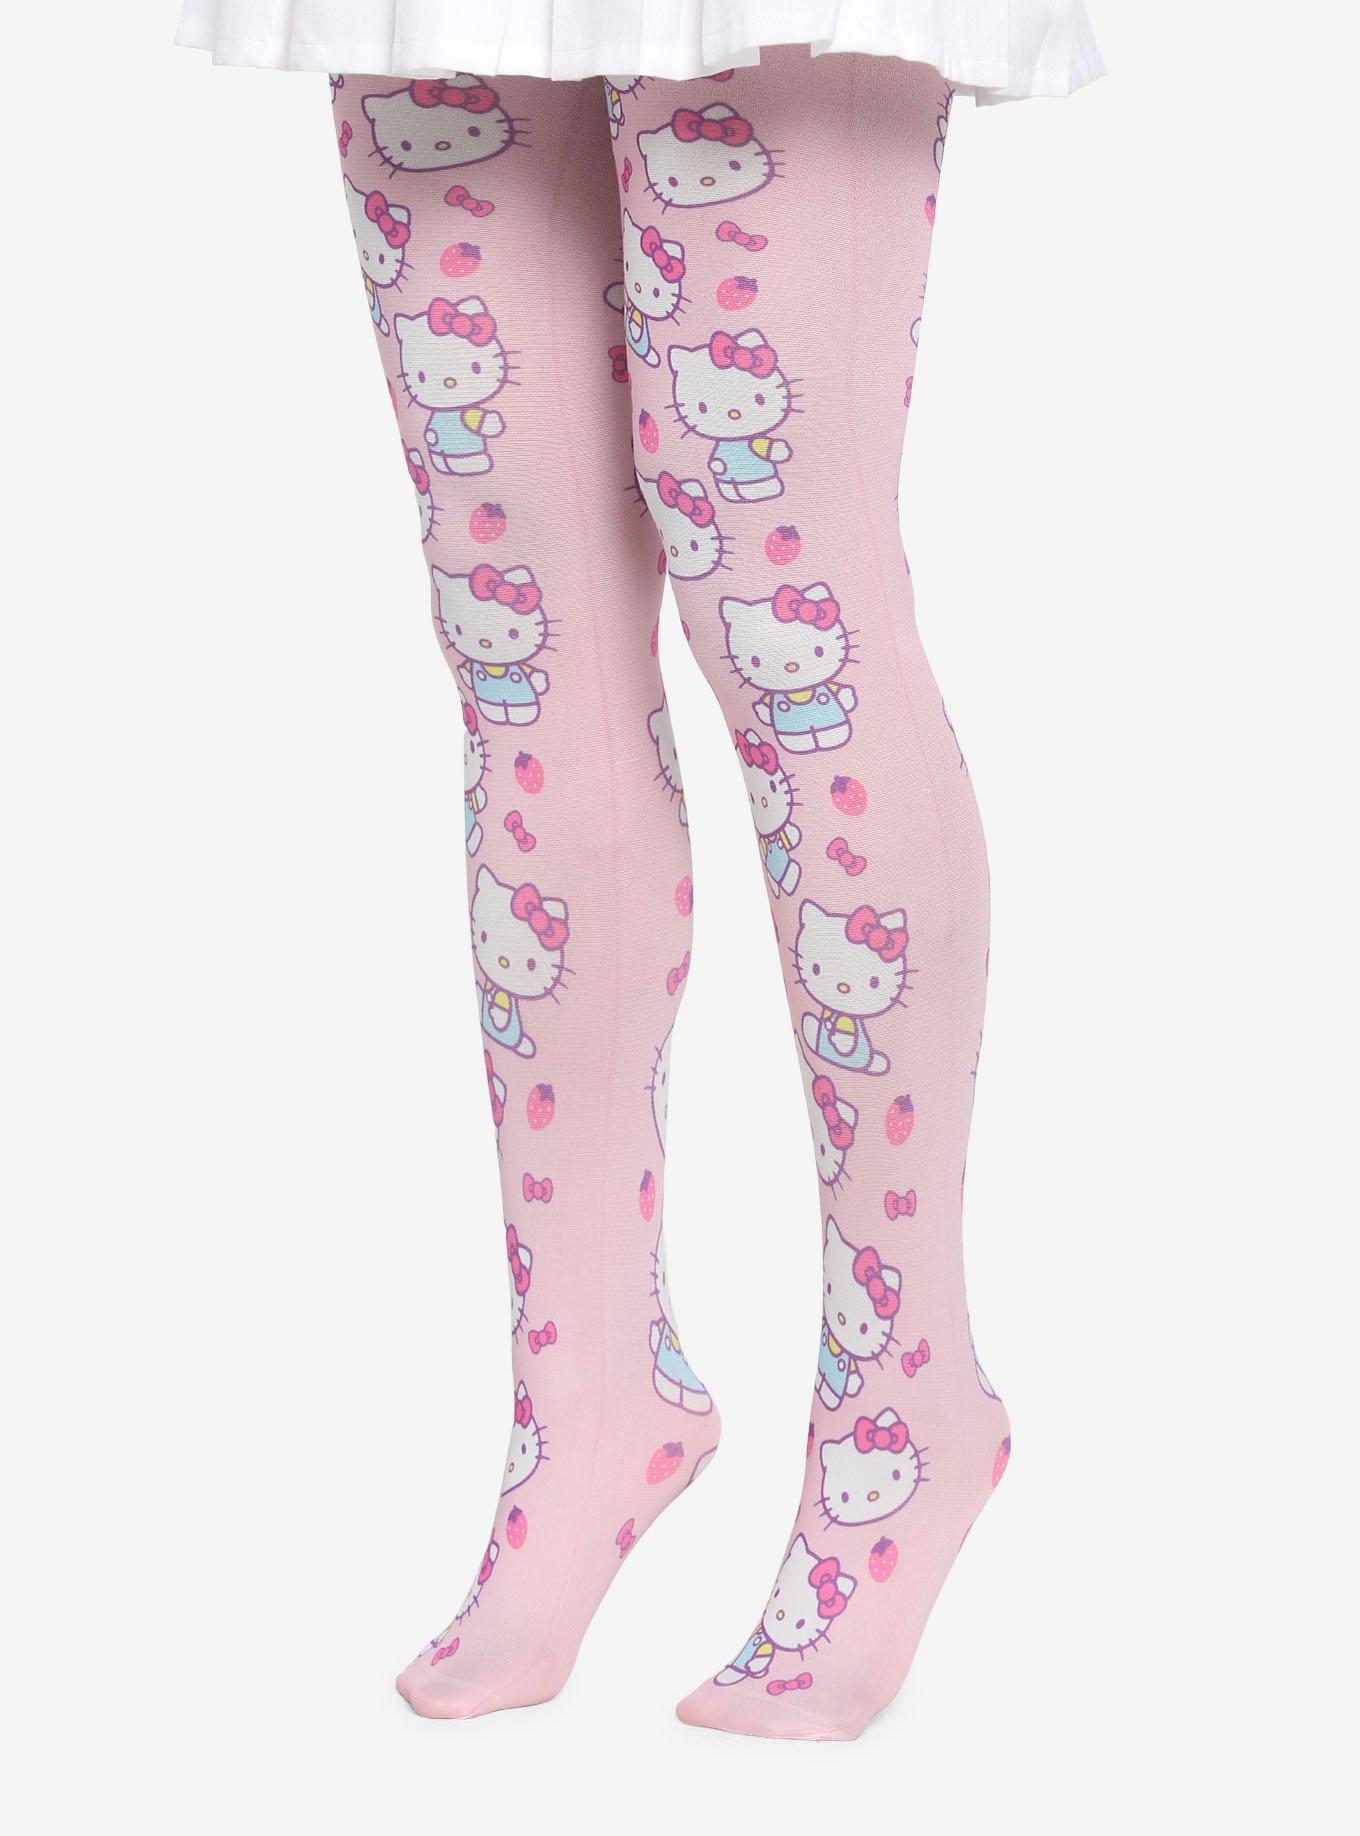 Cute hello kitty cat and bunny pattern teenage tights for women multi model  / Wa 